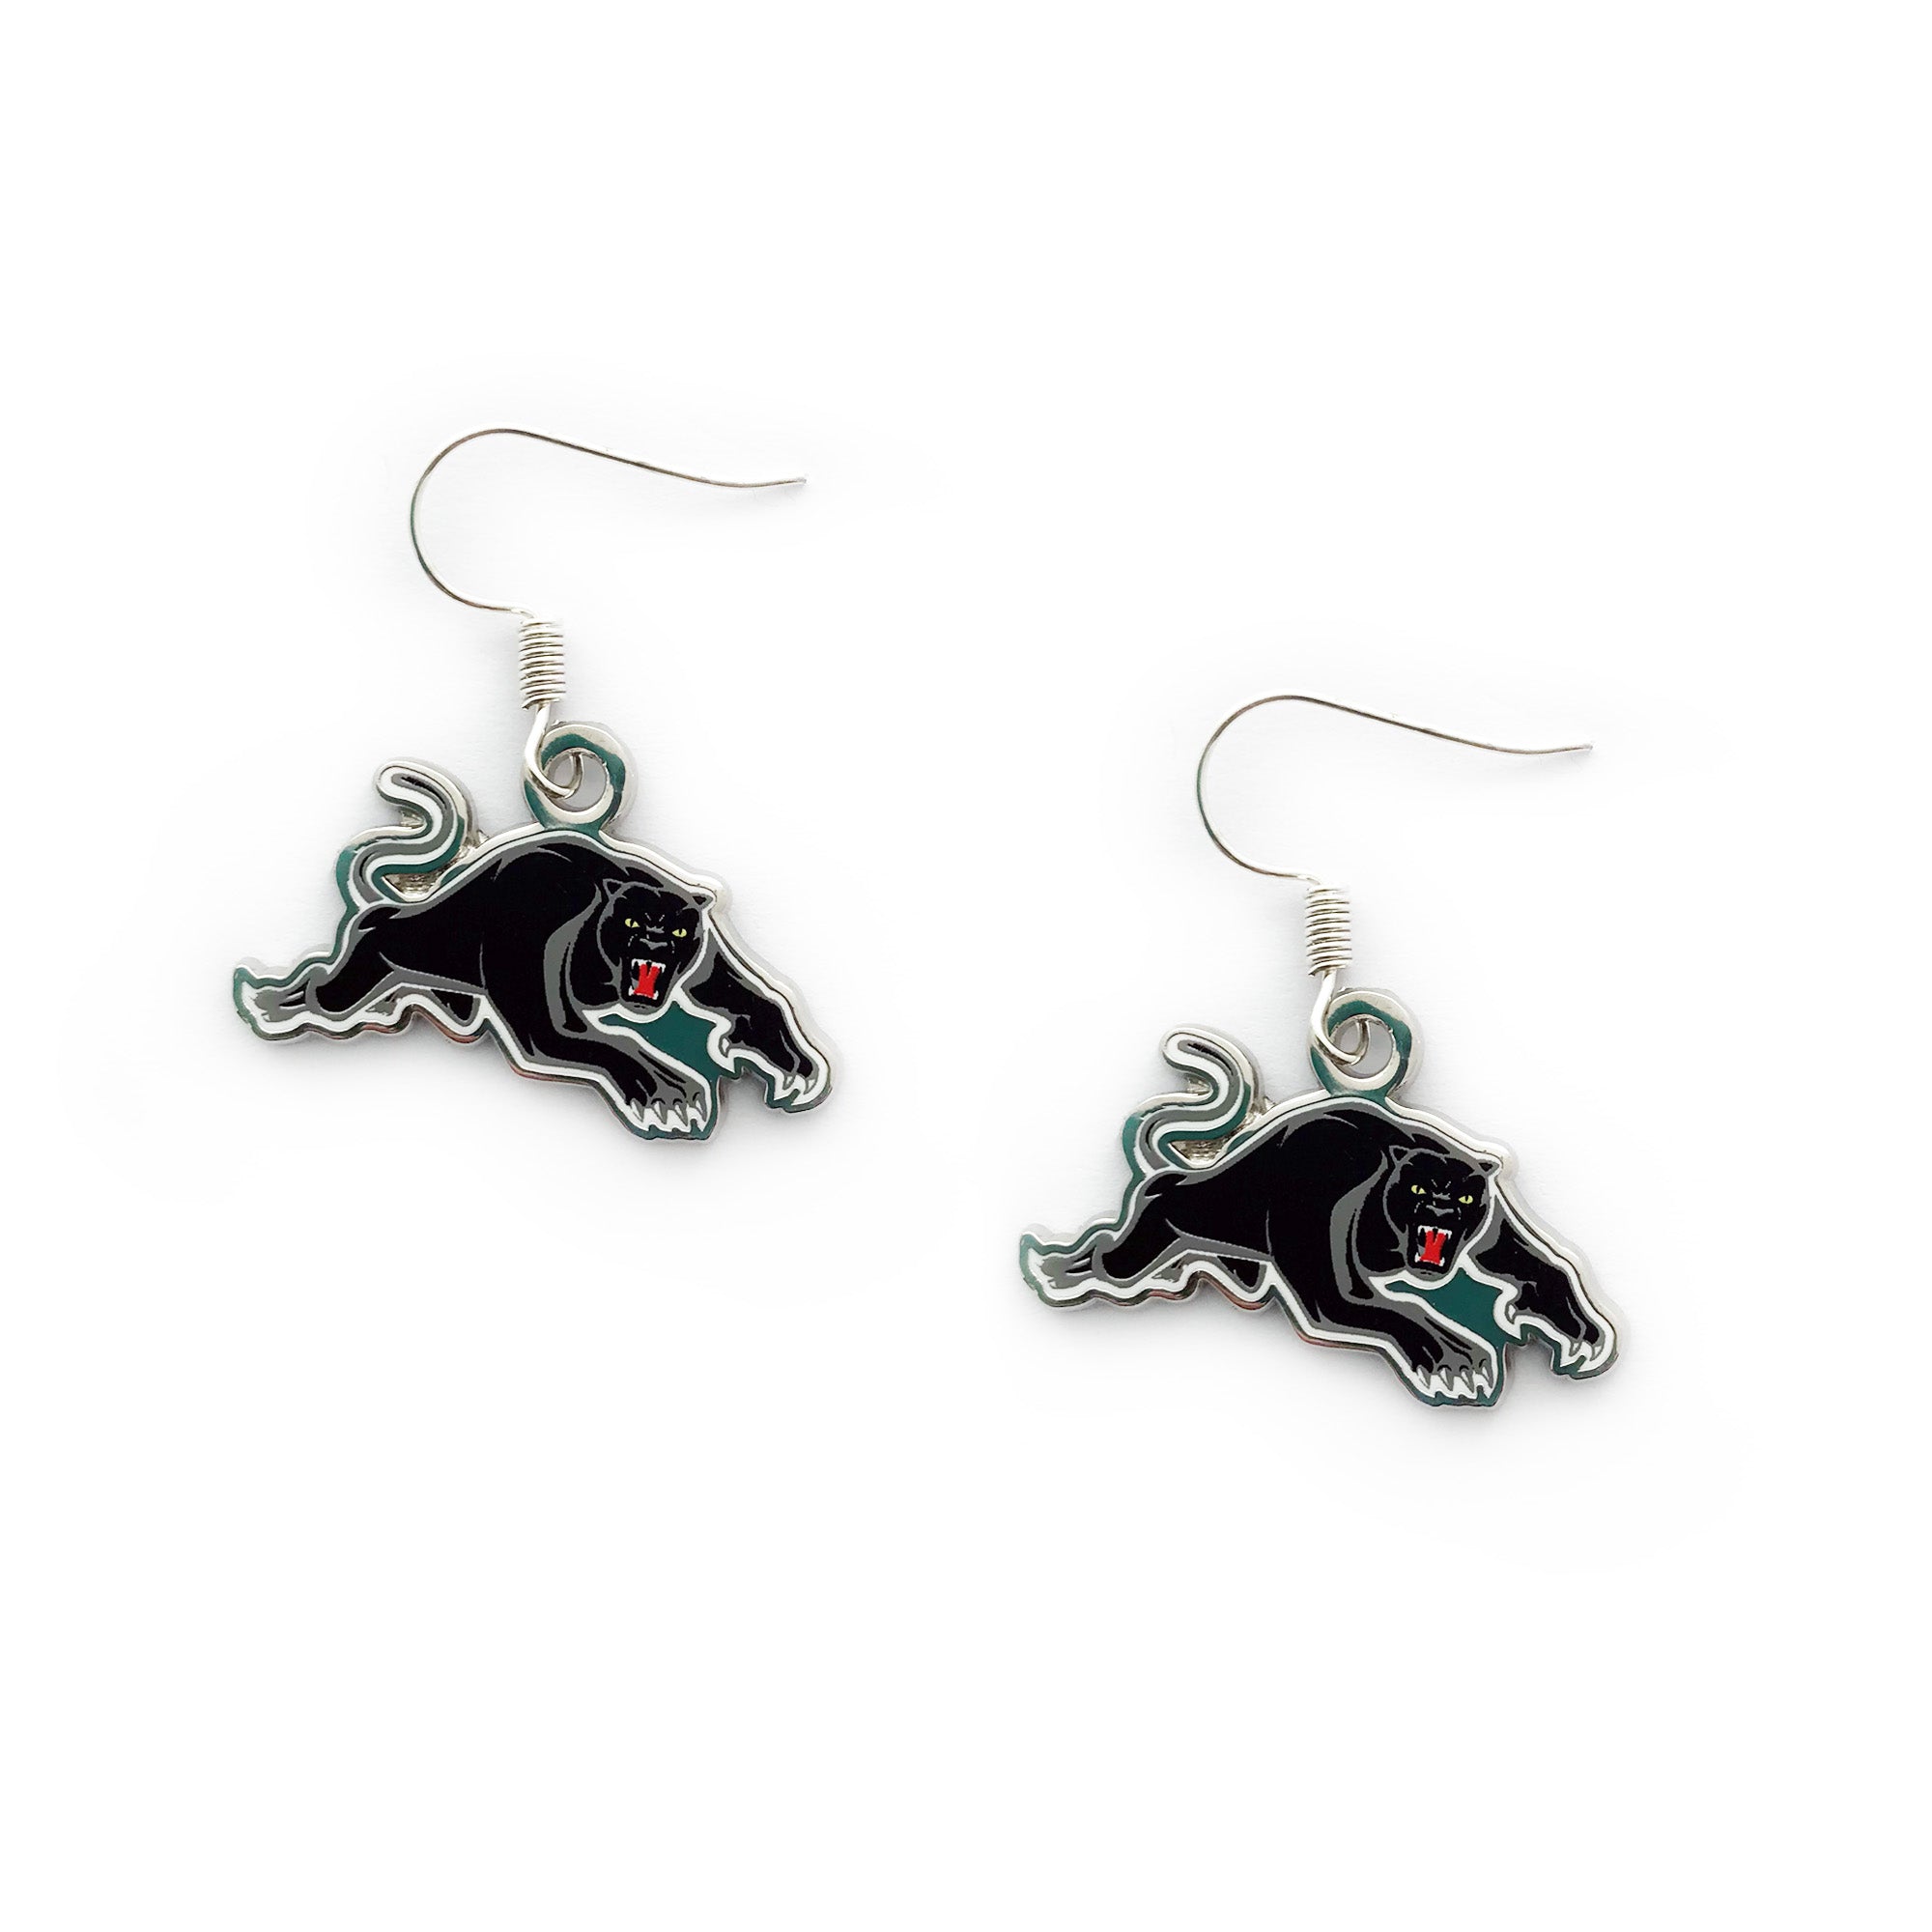 Penrith Panthers NRL Earrings